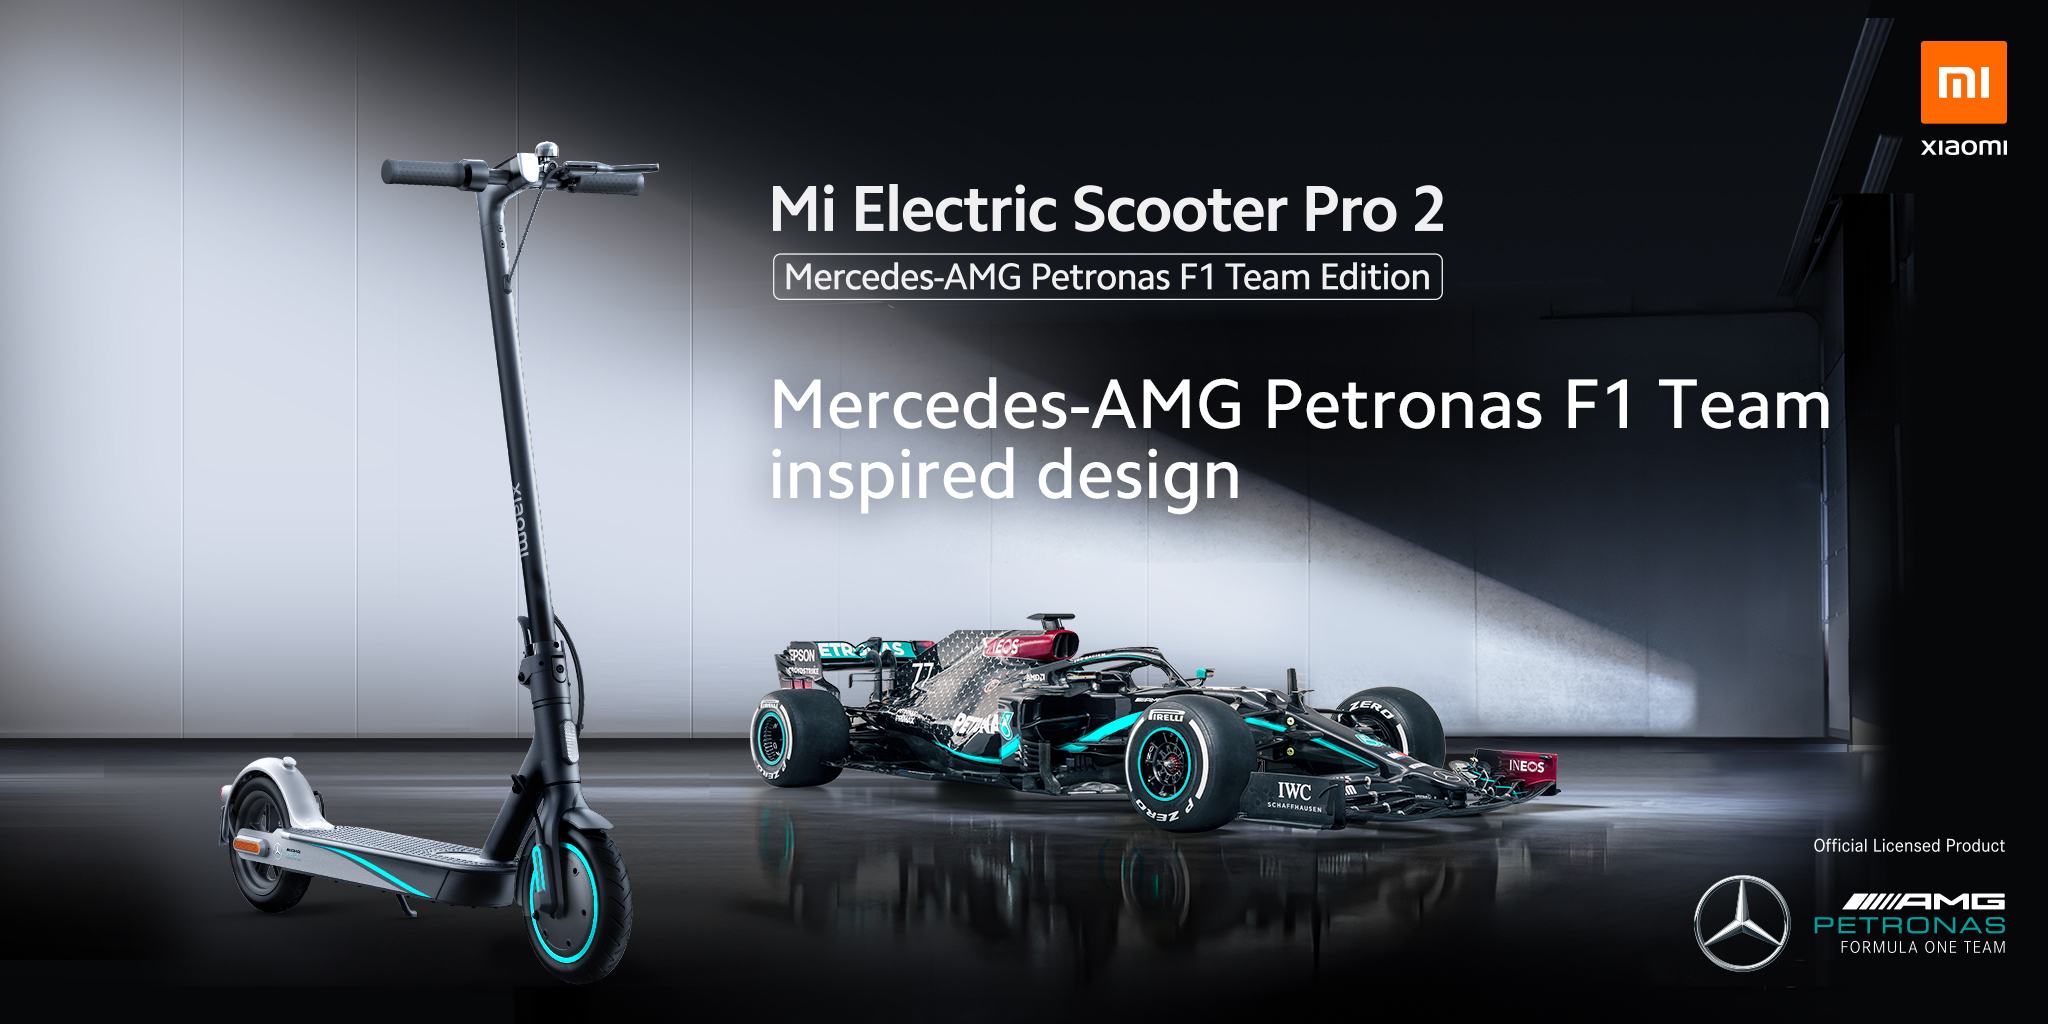 Team petronas f1 mercedes amg Mercedes